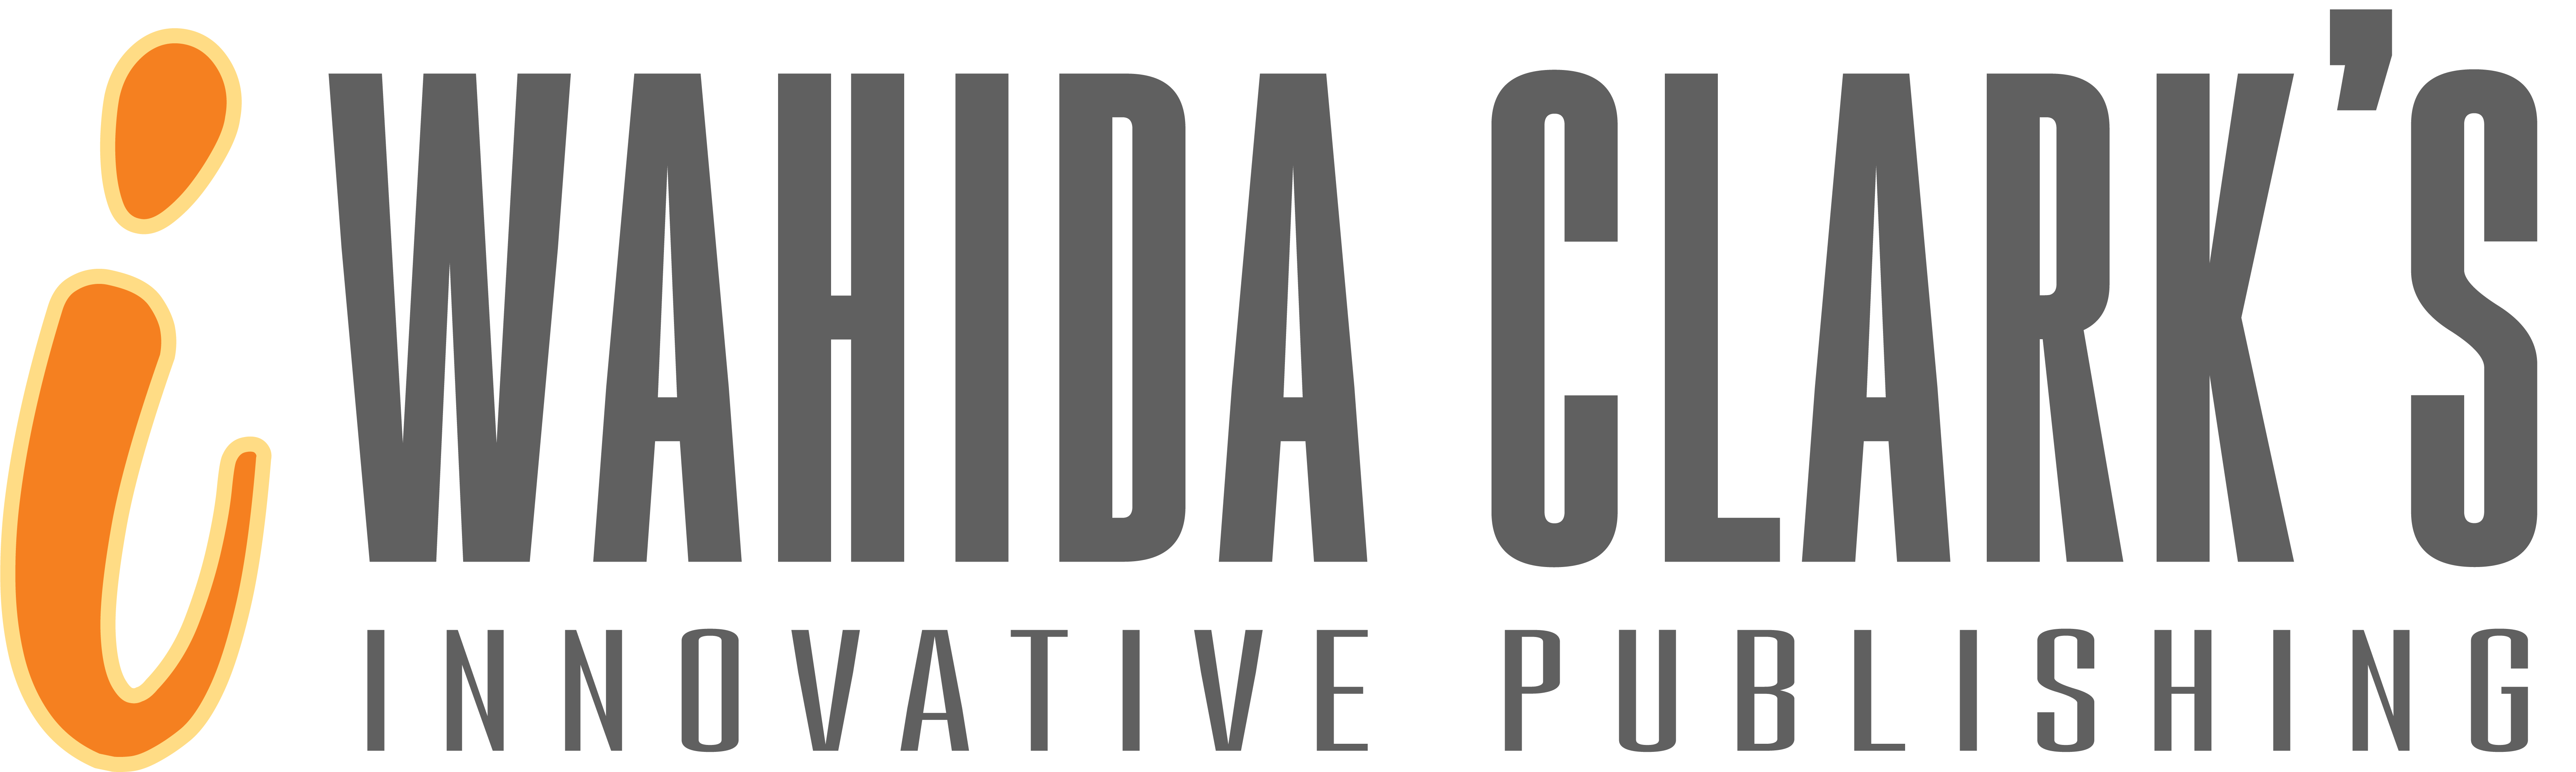 Wahida Clark's Innovative Publishing